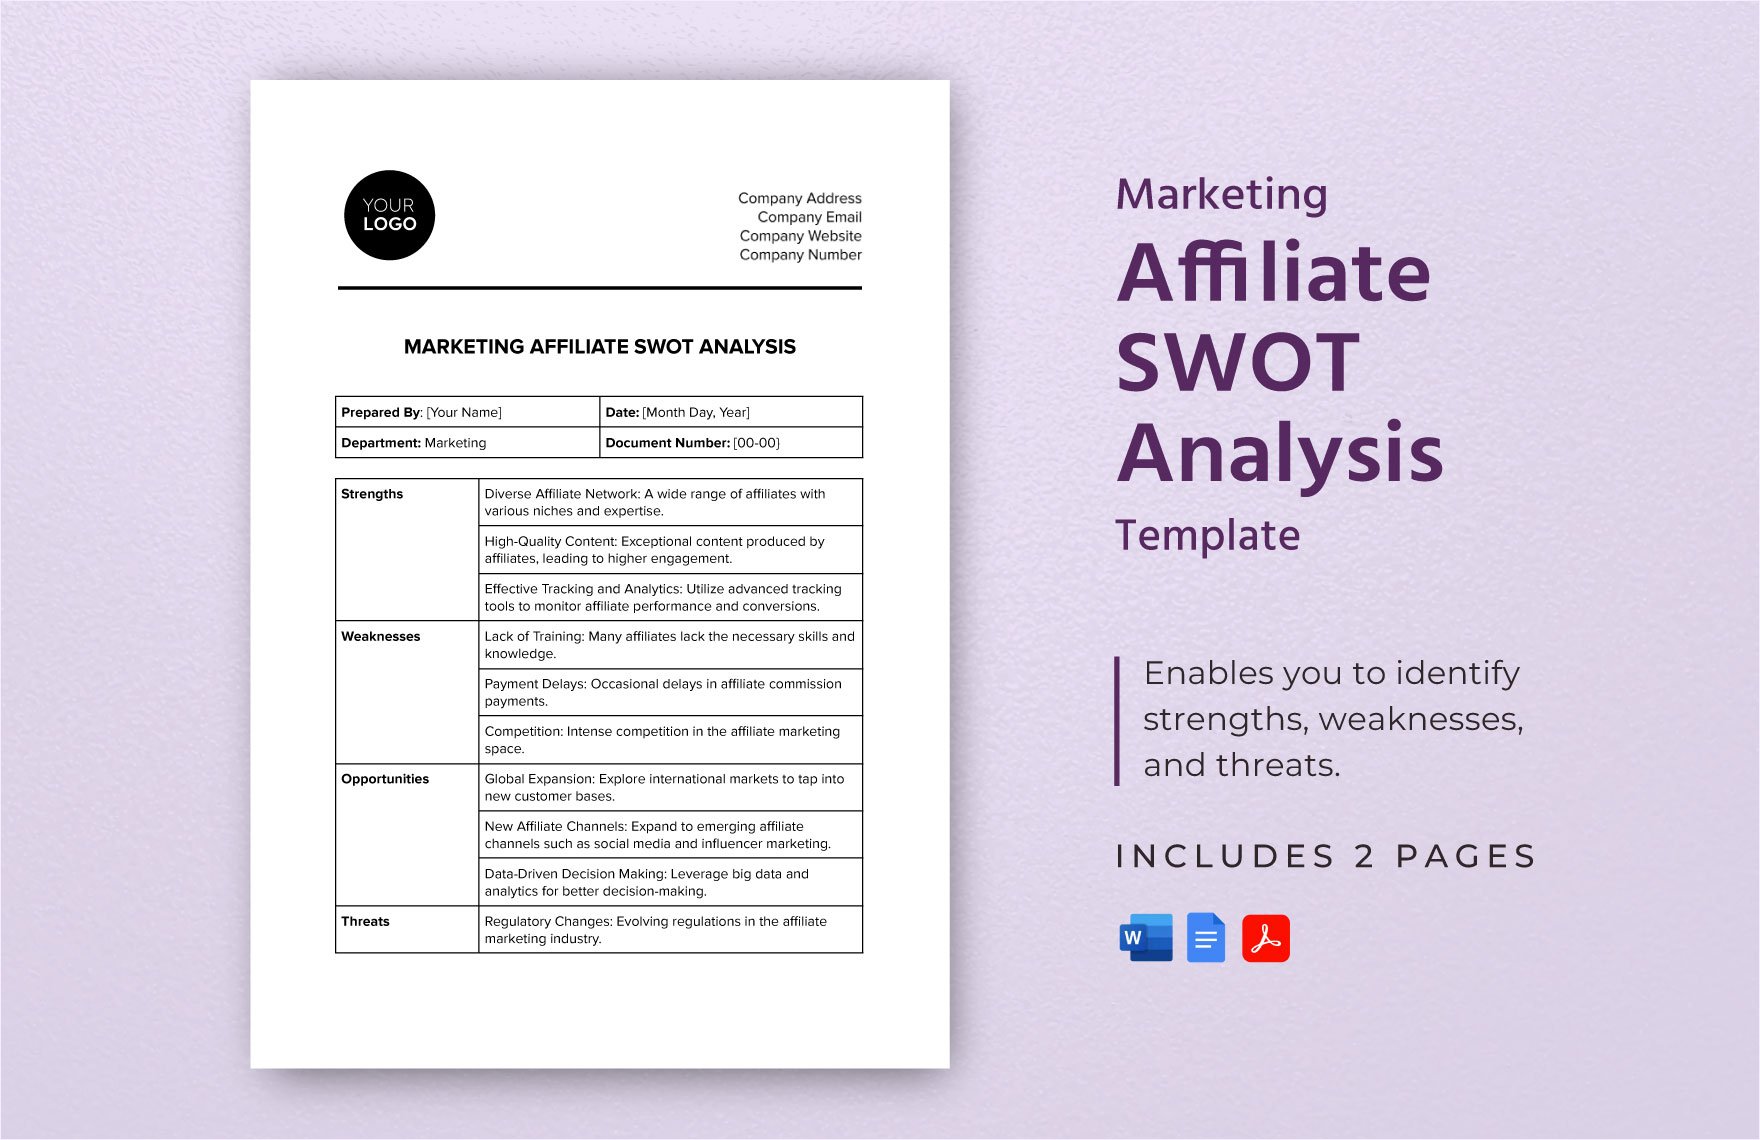 Marketing Affiliate SWOT Analysis Template